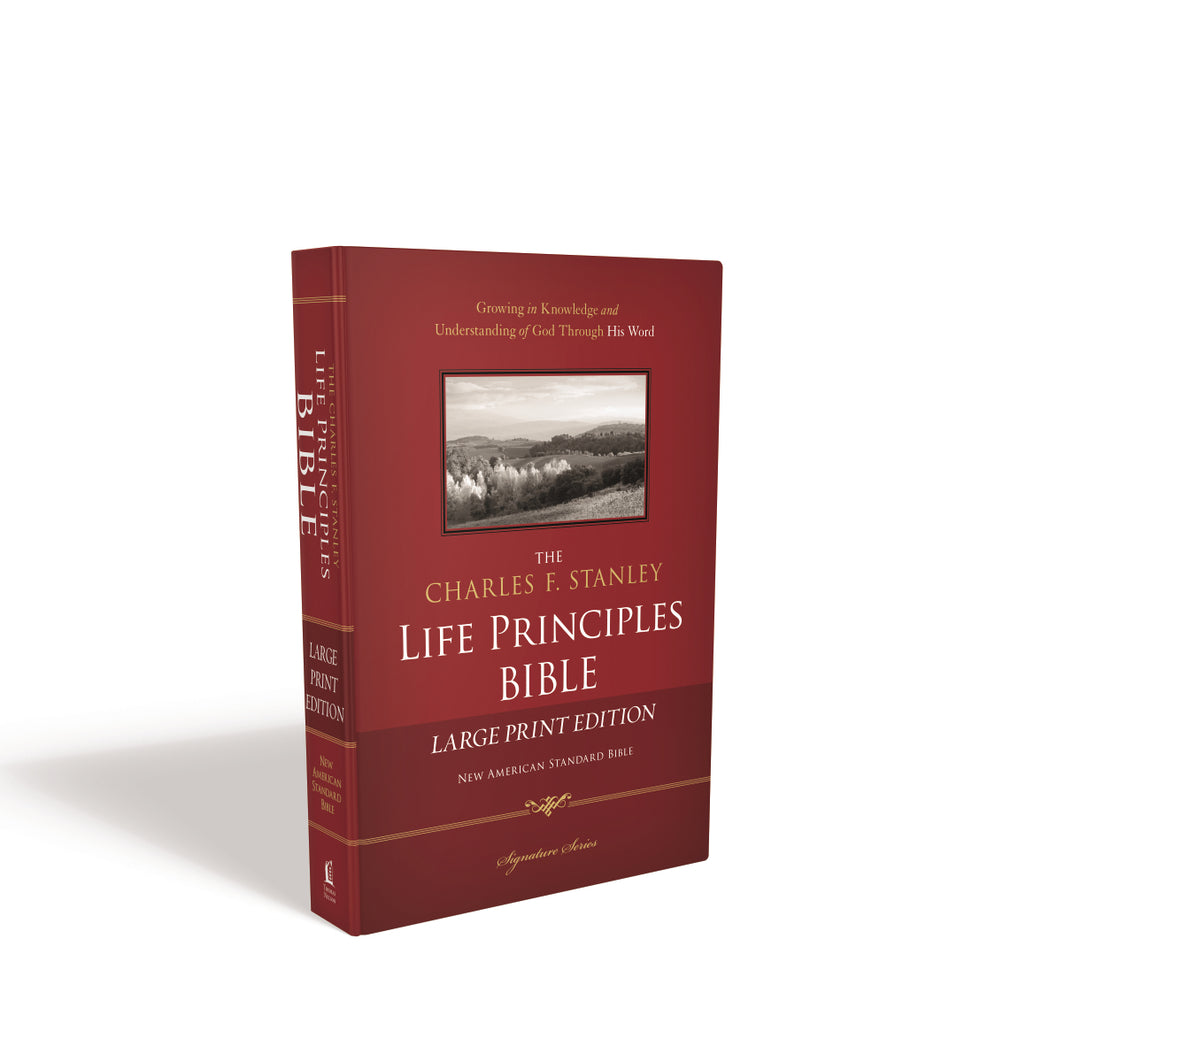 NASB, The Charles F. Stanley Life Principles Bible, Large Print: Large Print Edition